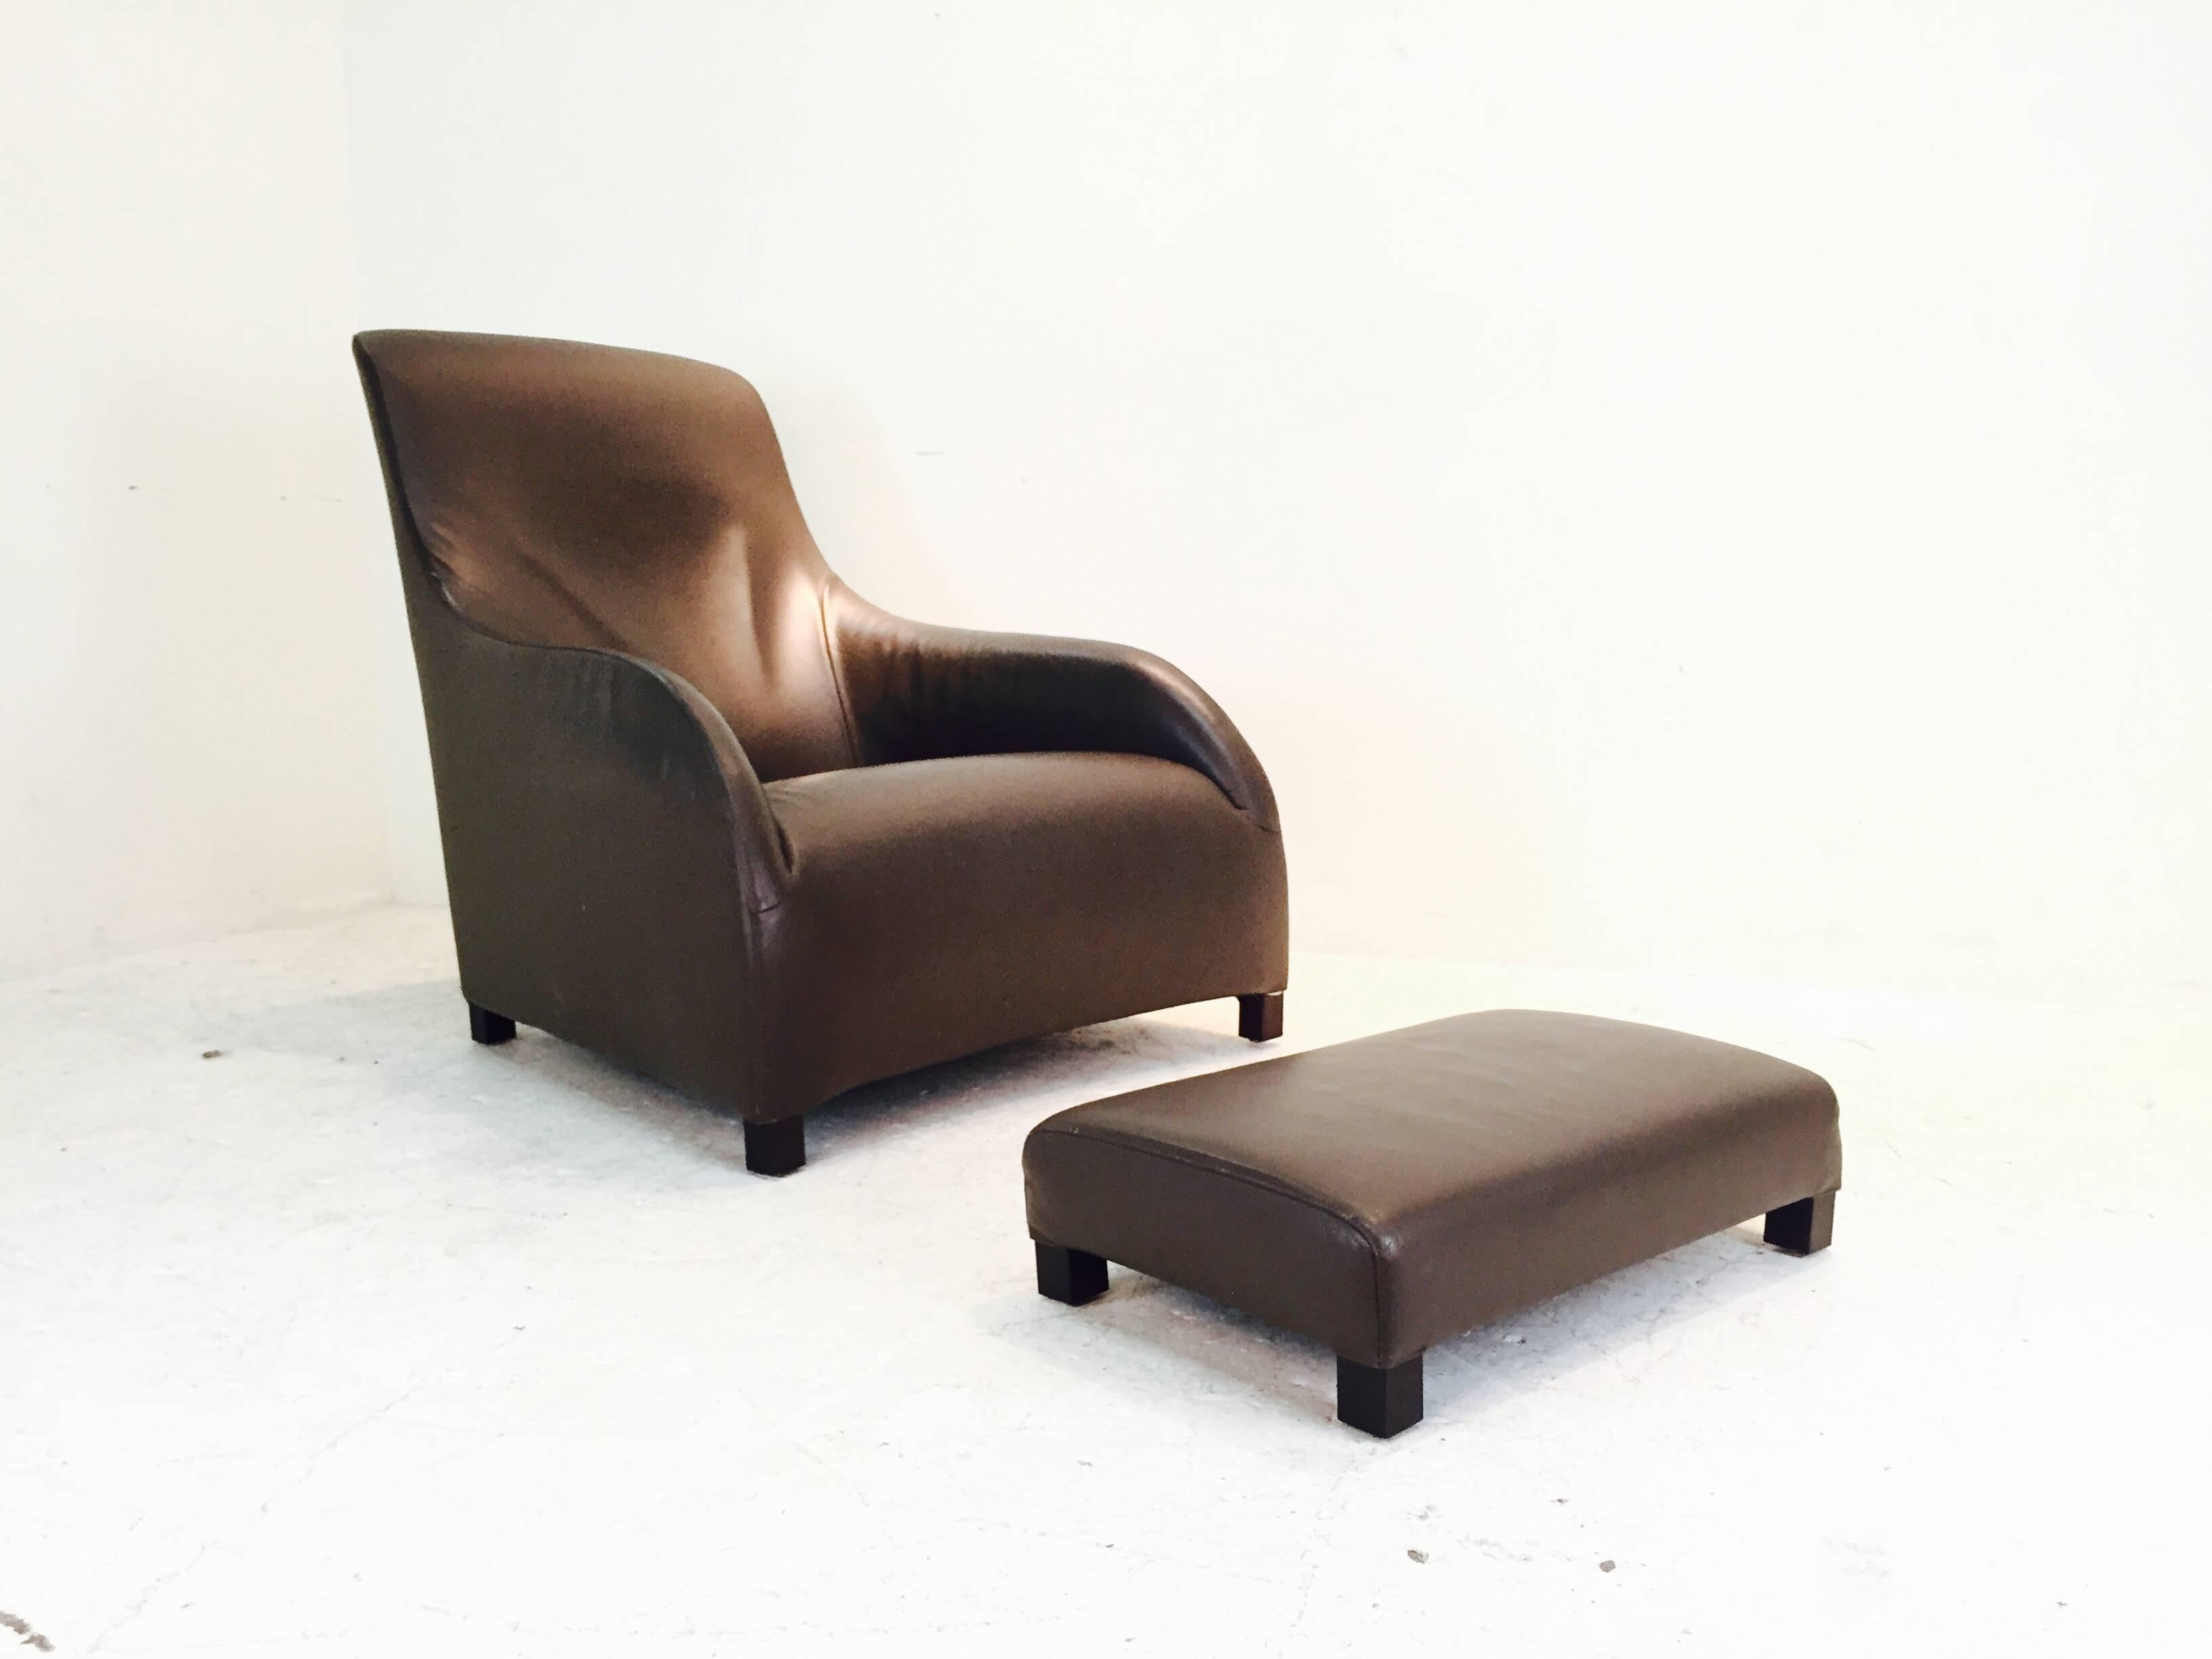 Kalos leather lounge chair by Antonio Citterio for B&B Italia.